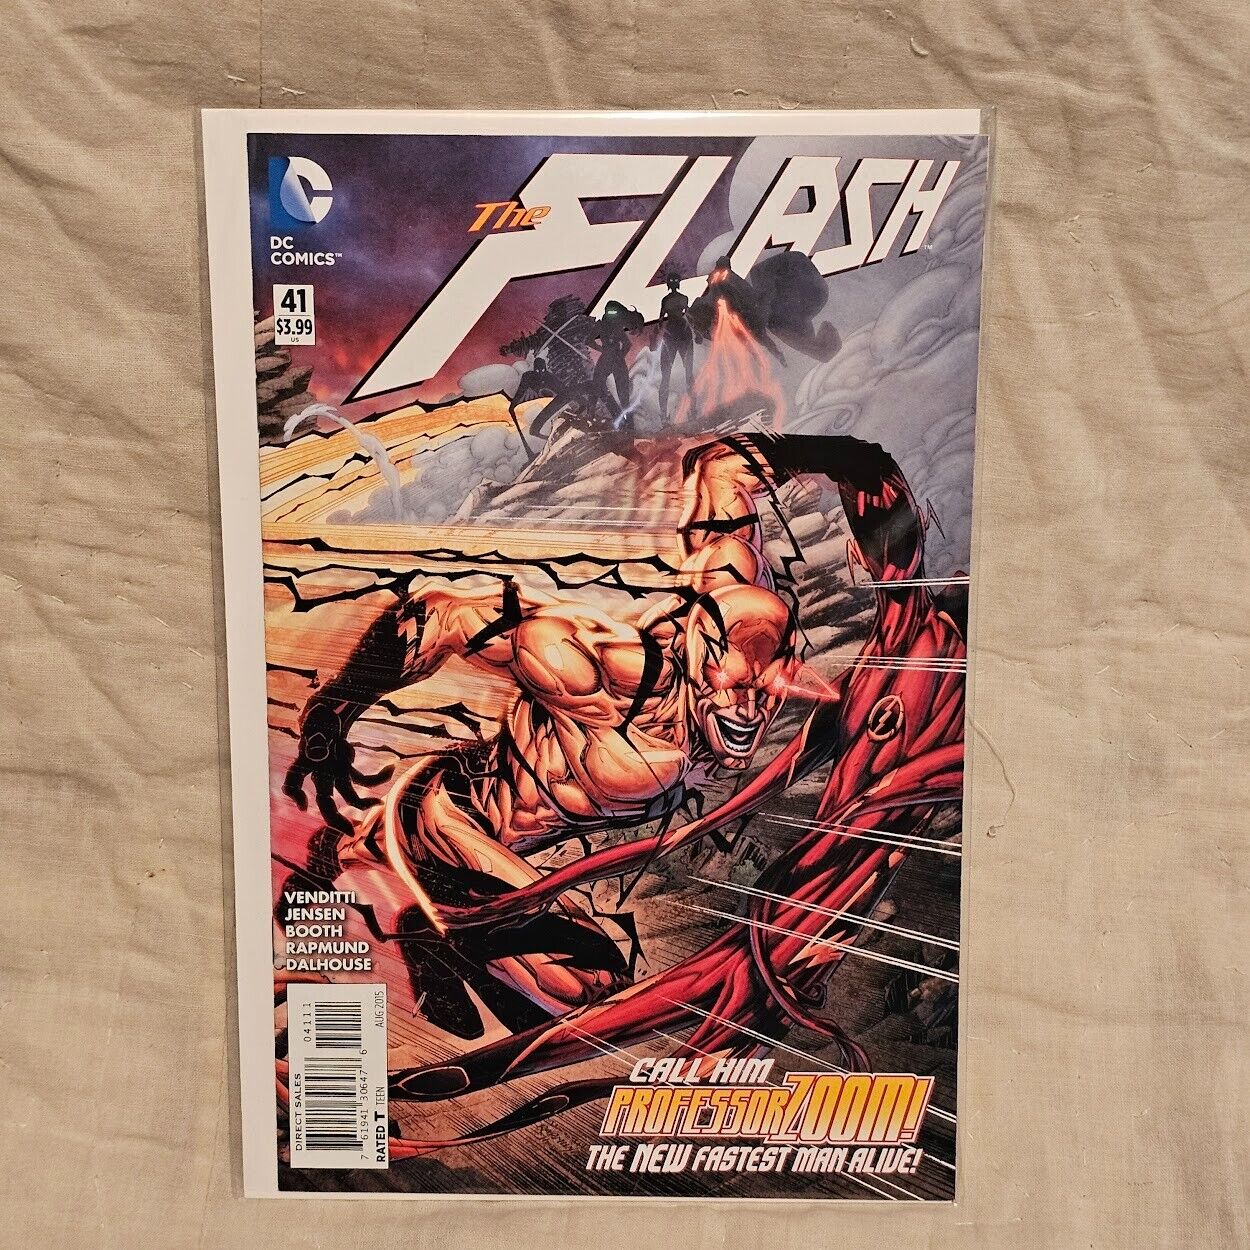 The Flash #41 DC Comics August 2015, Call Him Professor Zoom